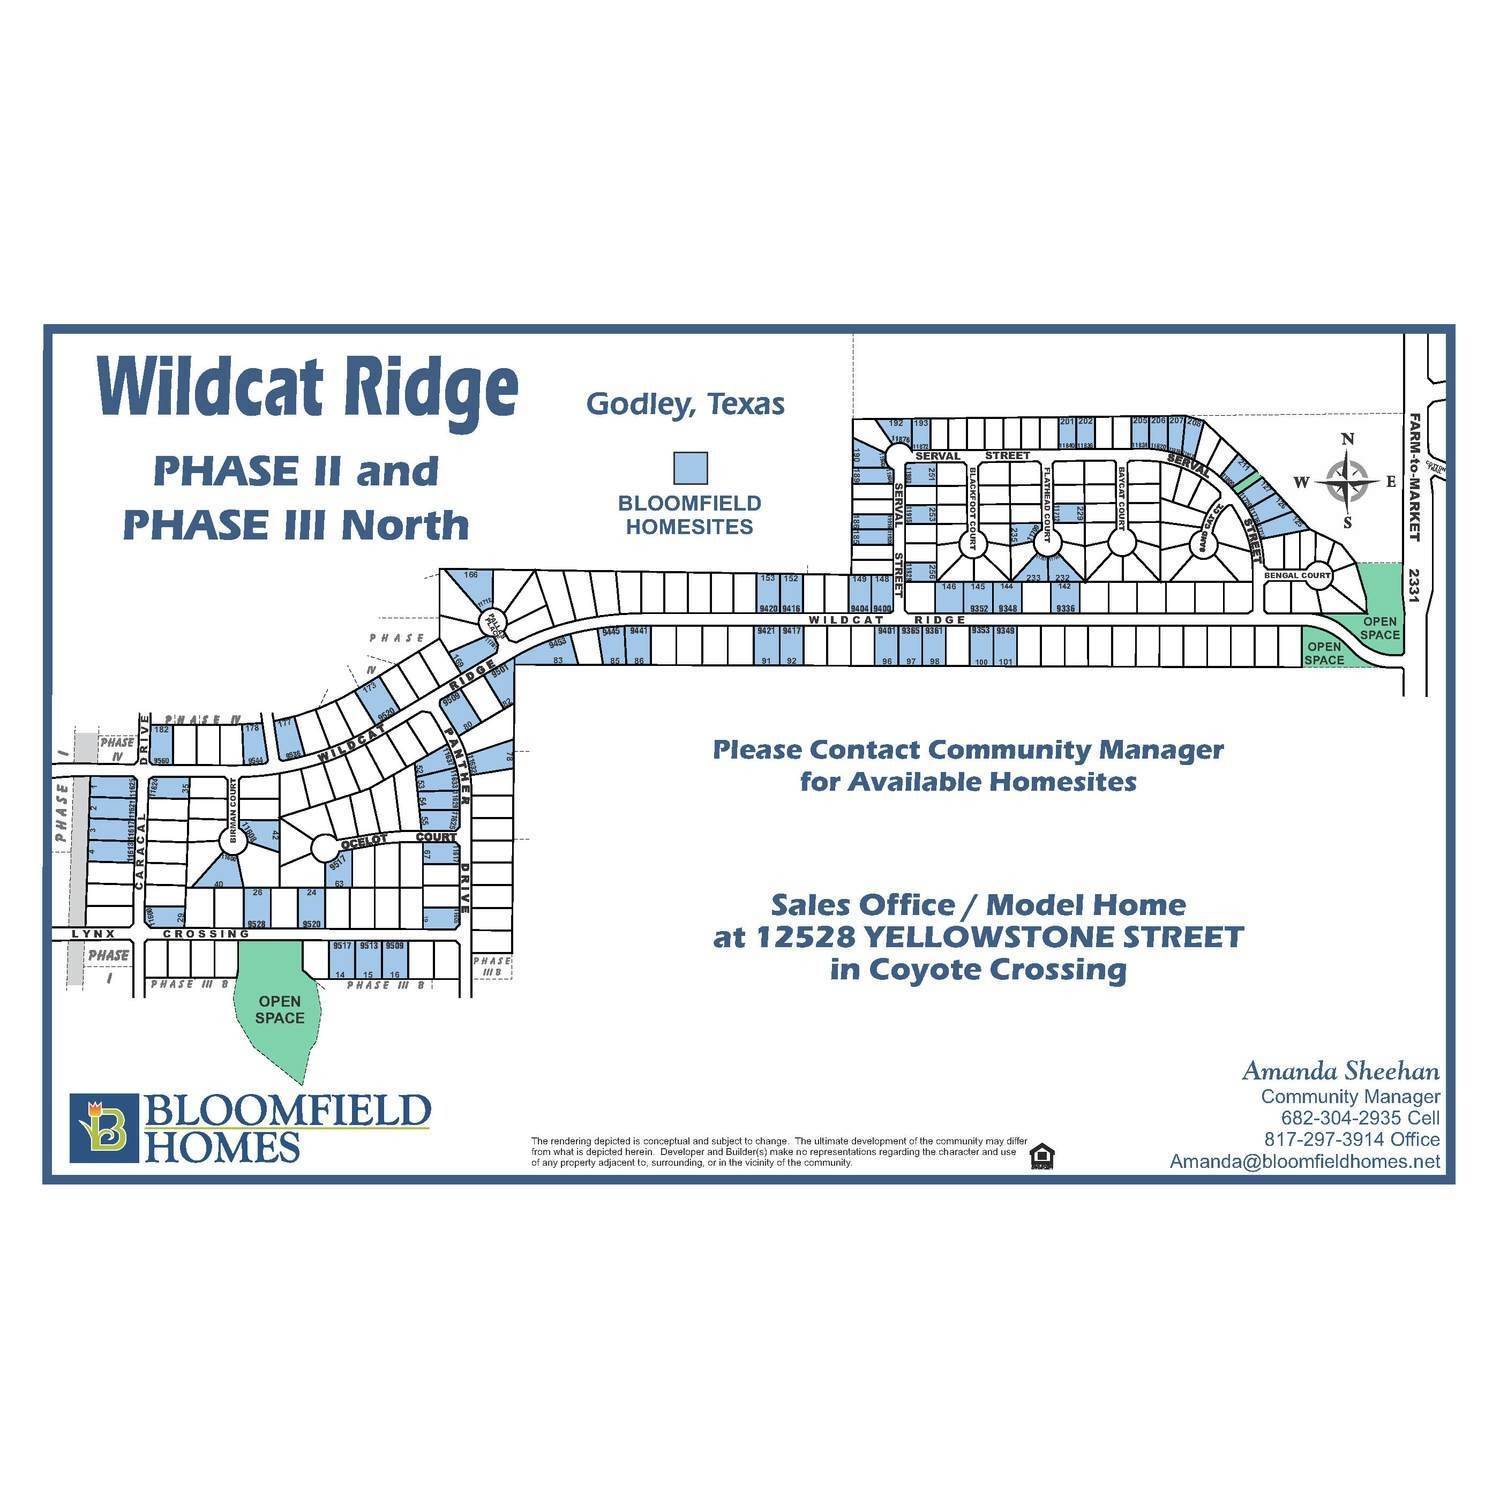 Wildcat Ridge gebouw op 12528 Yellowstone Street, Godley, TX 76044